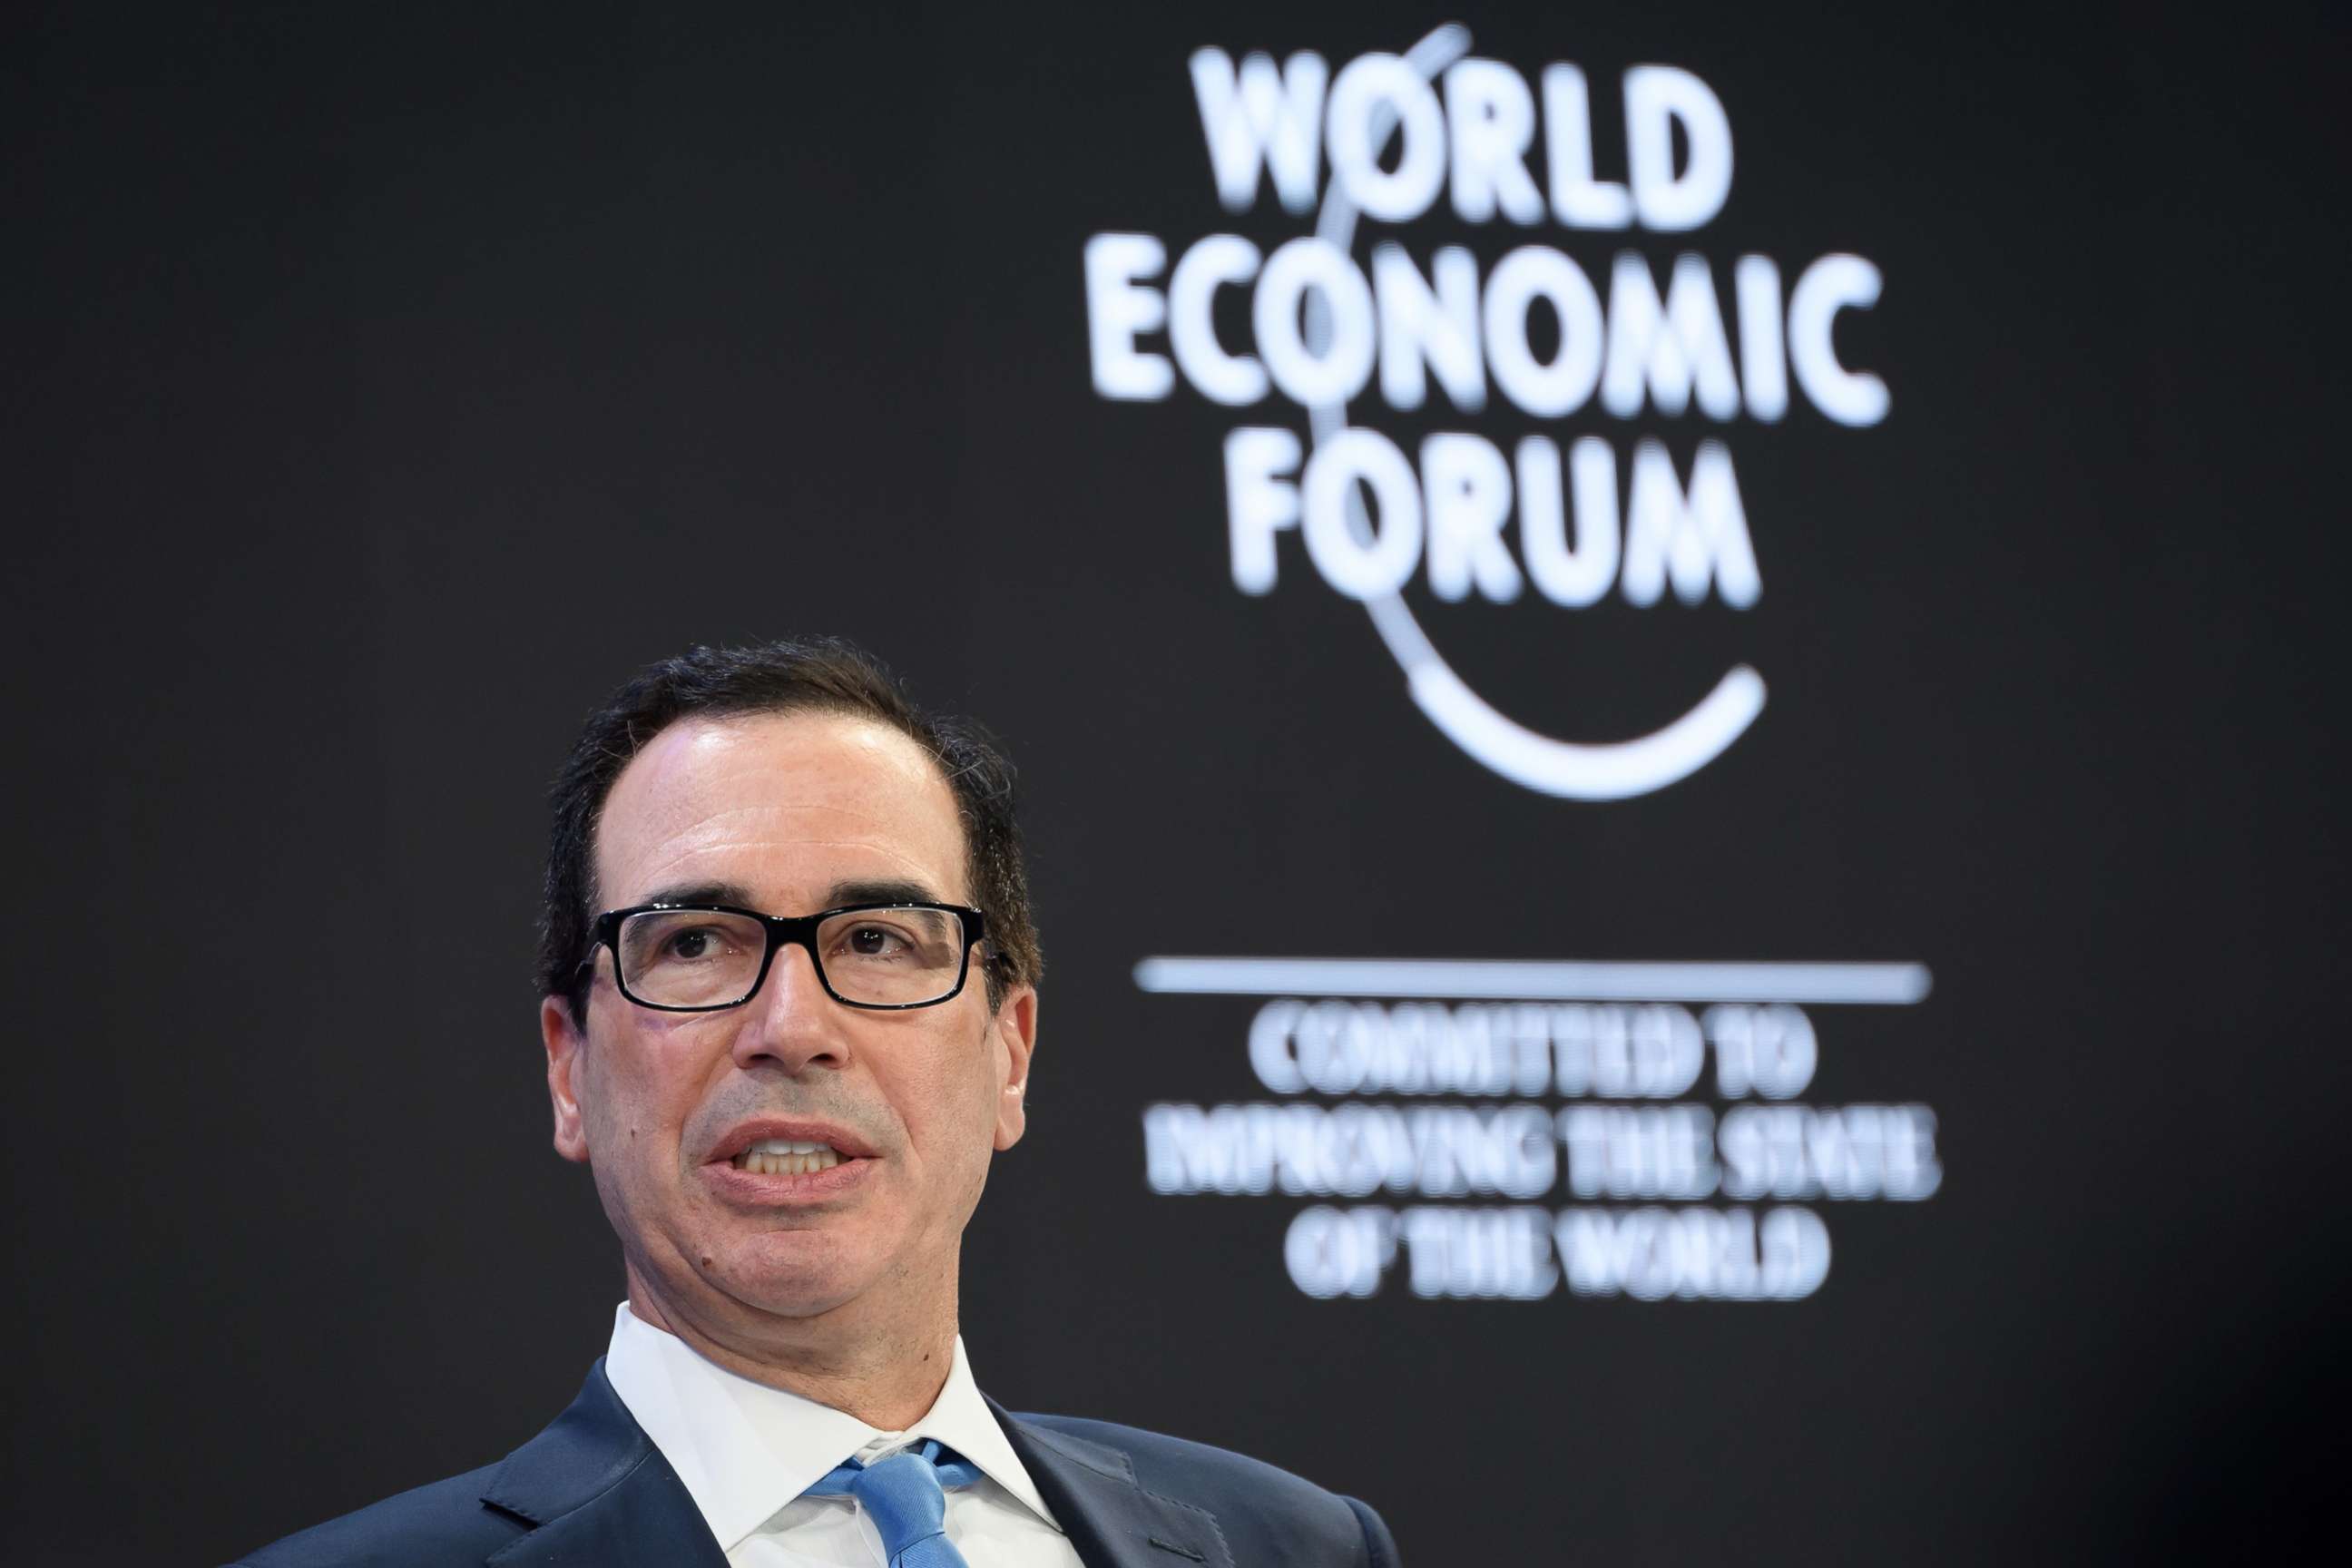 PHOTO: Treasury Secretary Steven Mnuchin attends a session during the World Economic Forum (WEF) annual meeting in Davos, Switzerland, Jan. 21, 2020.